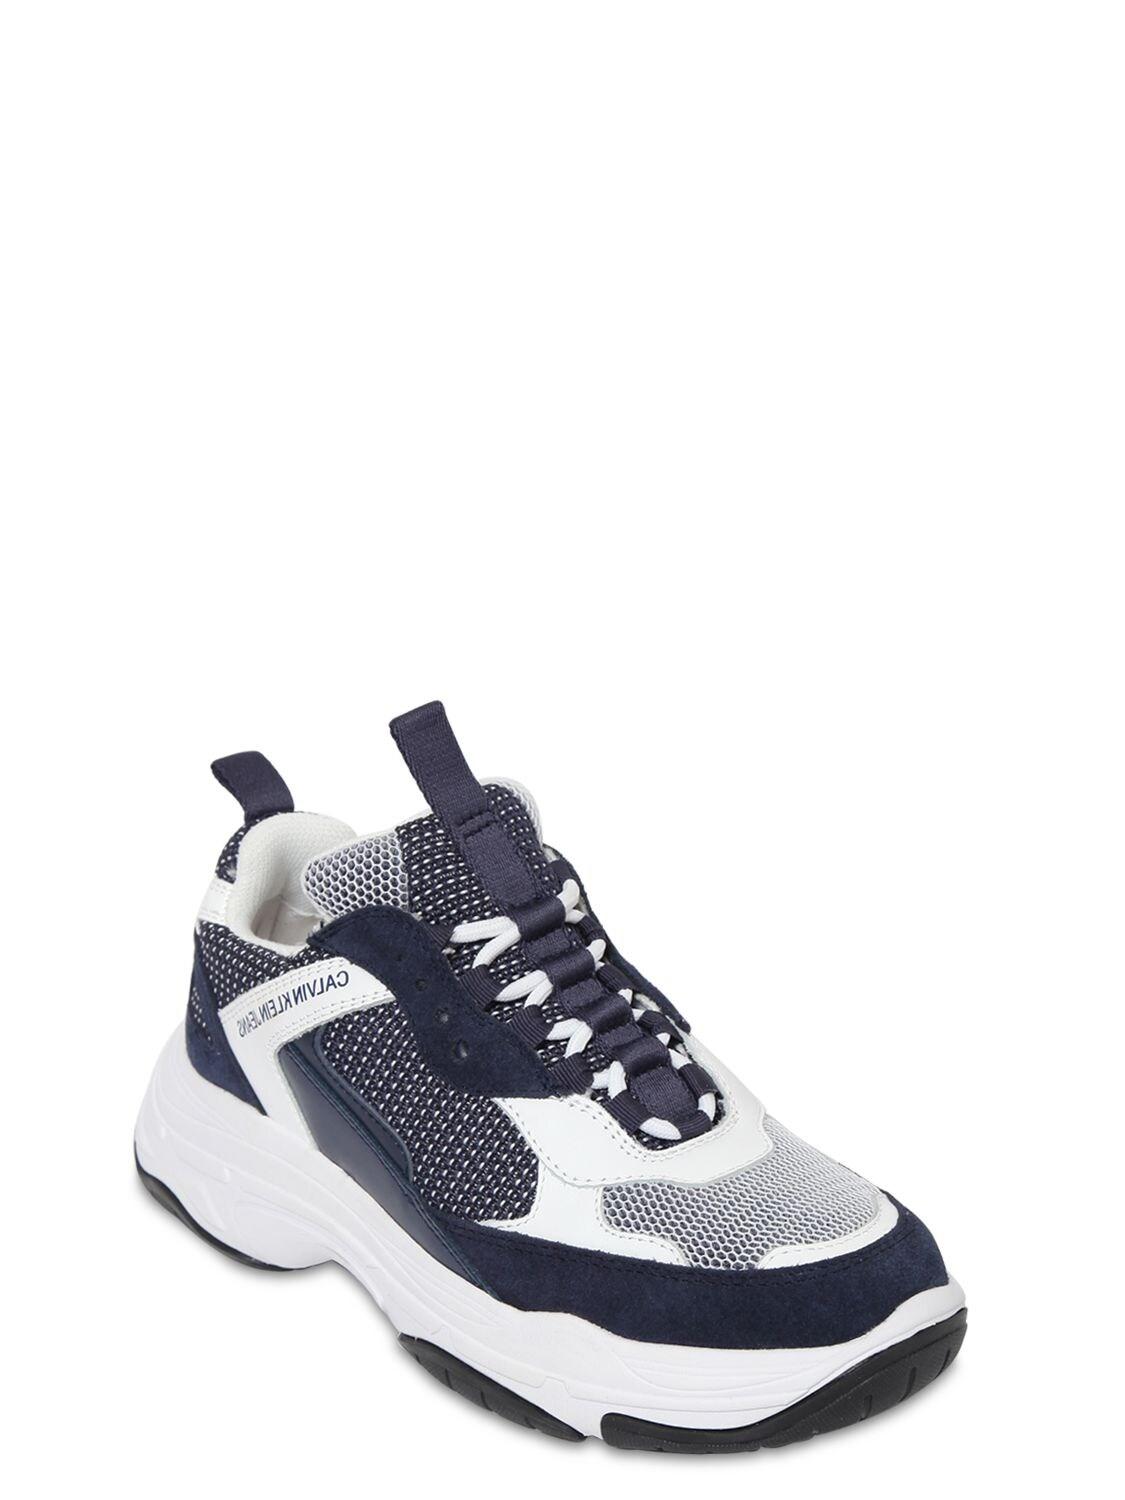 Calvin Klein 50mm Maya Mesh & Leather Sneakers in White/Navy (Blue) | Lyst